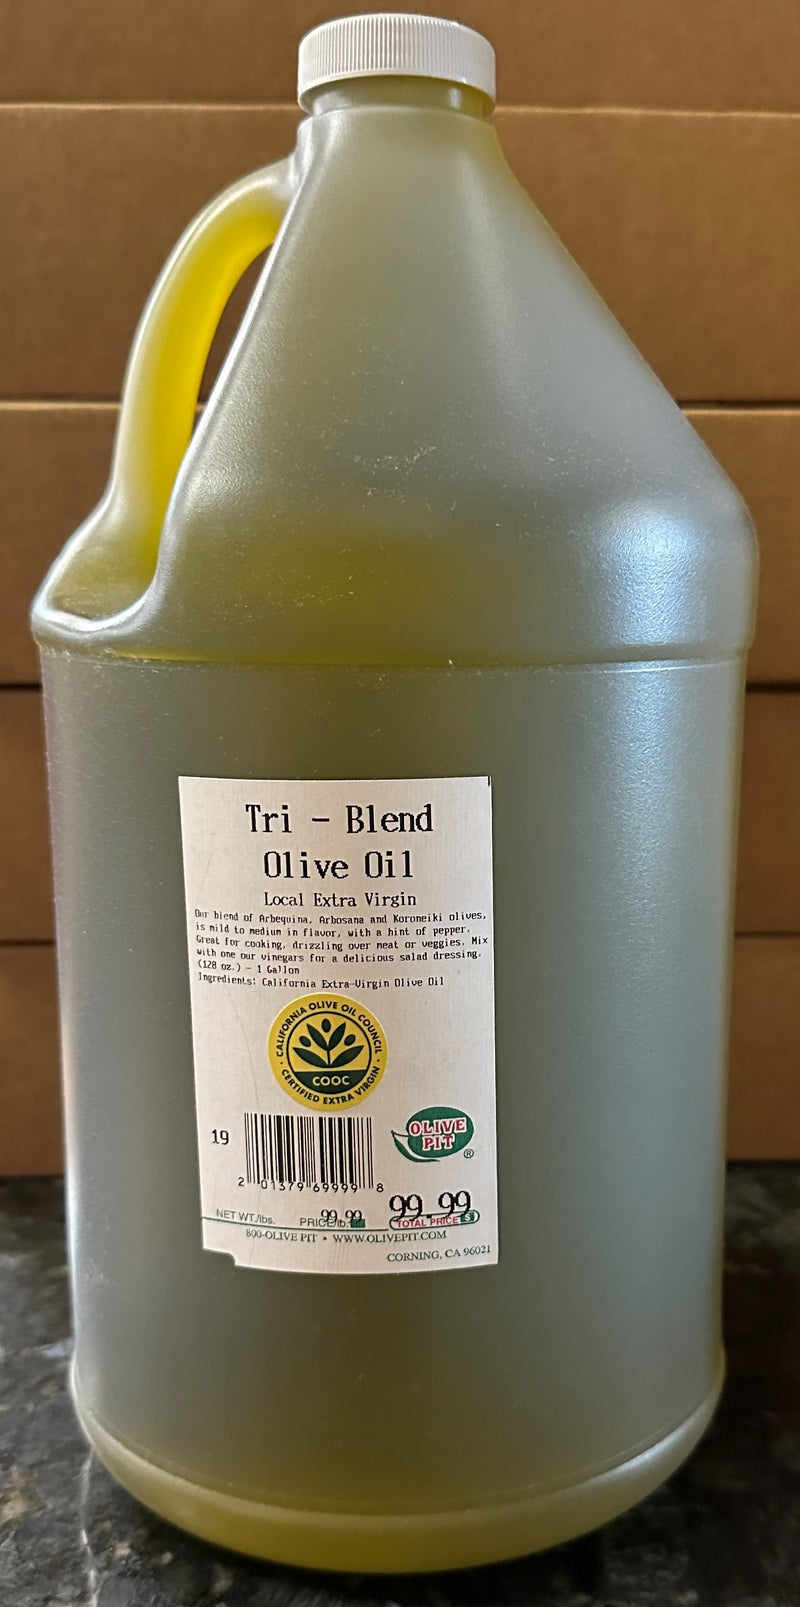 Tri - Blend Local Extra Virgin Olive Oil (1-Gallon)